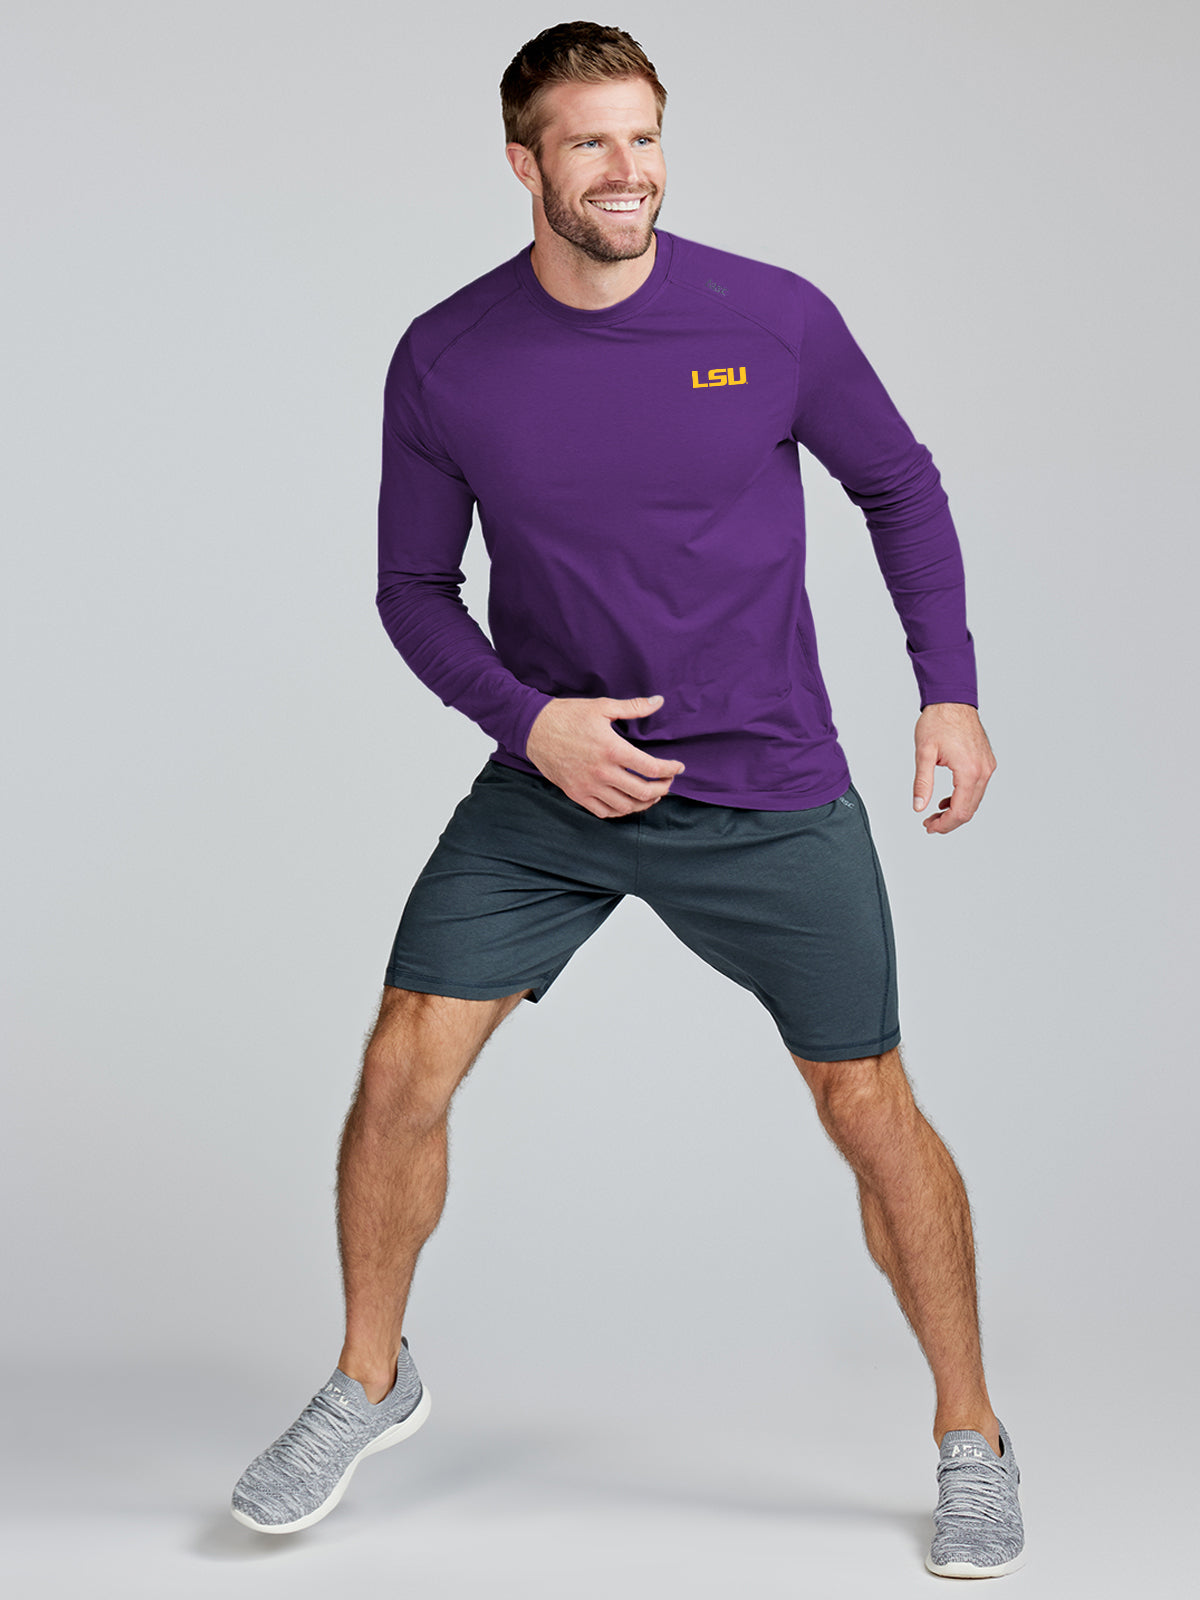 Carrollton Long Sleeve Fitness T-Shirt - LSU - tasc Performance (PurpleC)